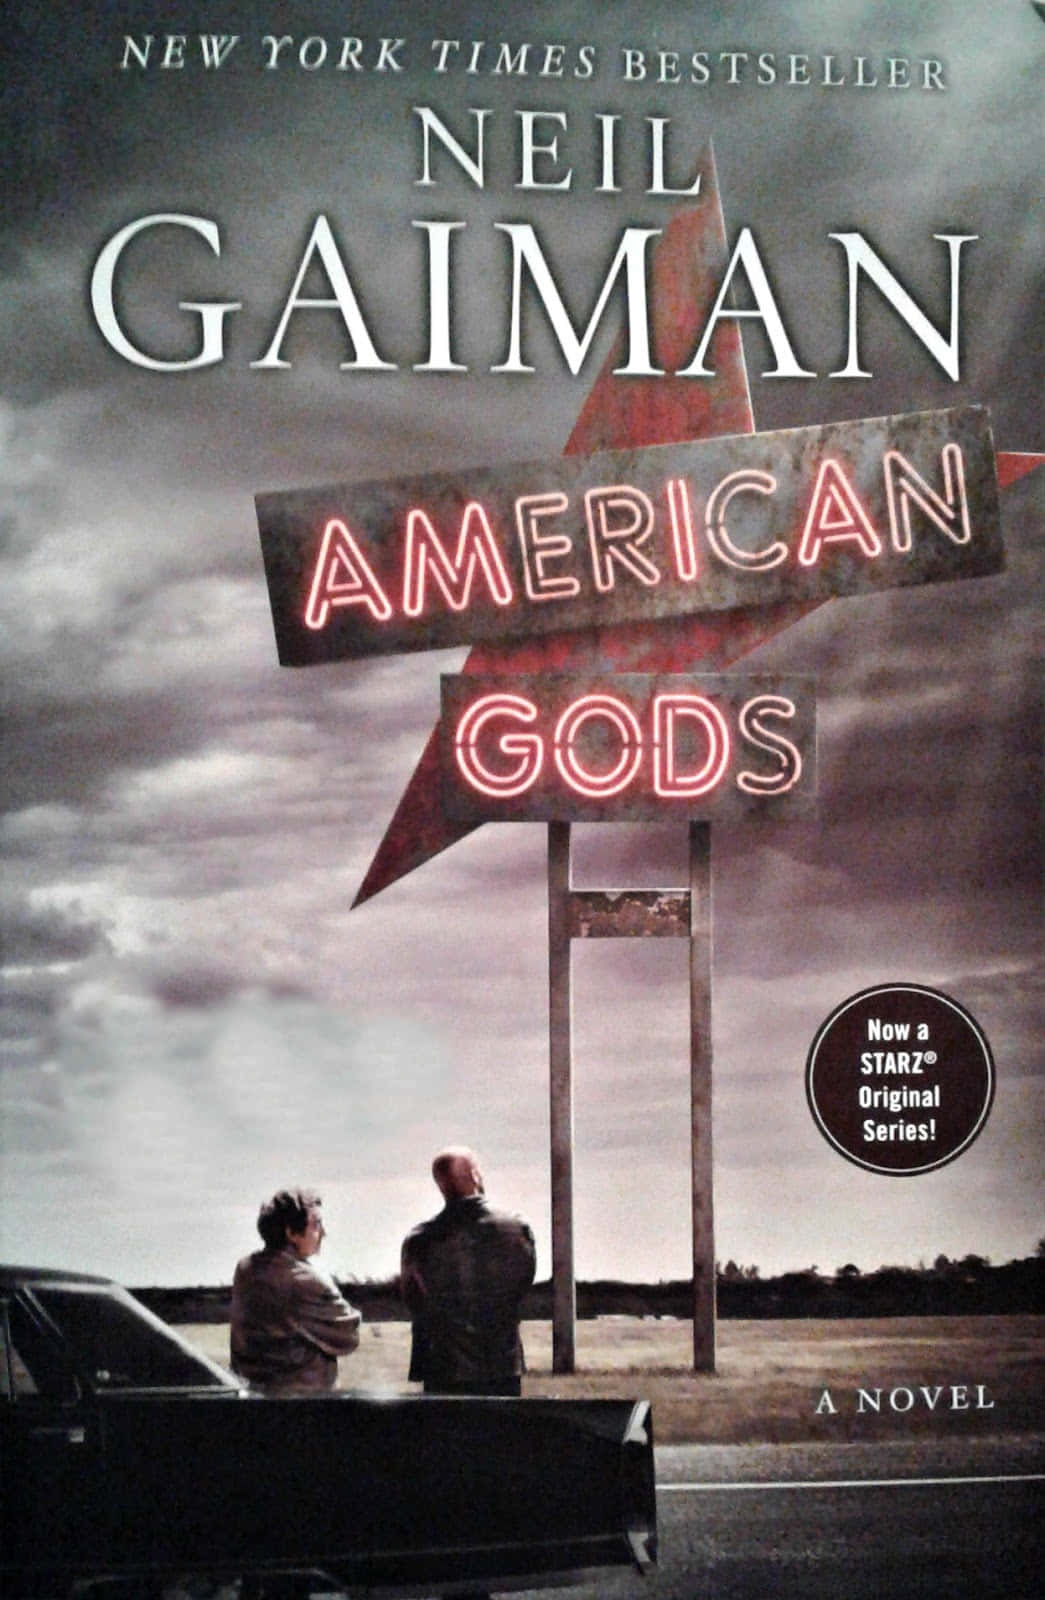 "American Gods: Experience the Mythology Like Never Before"